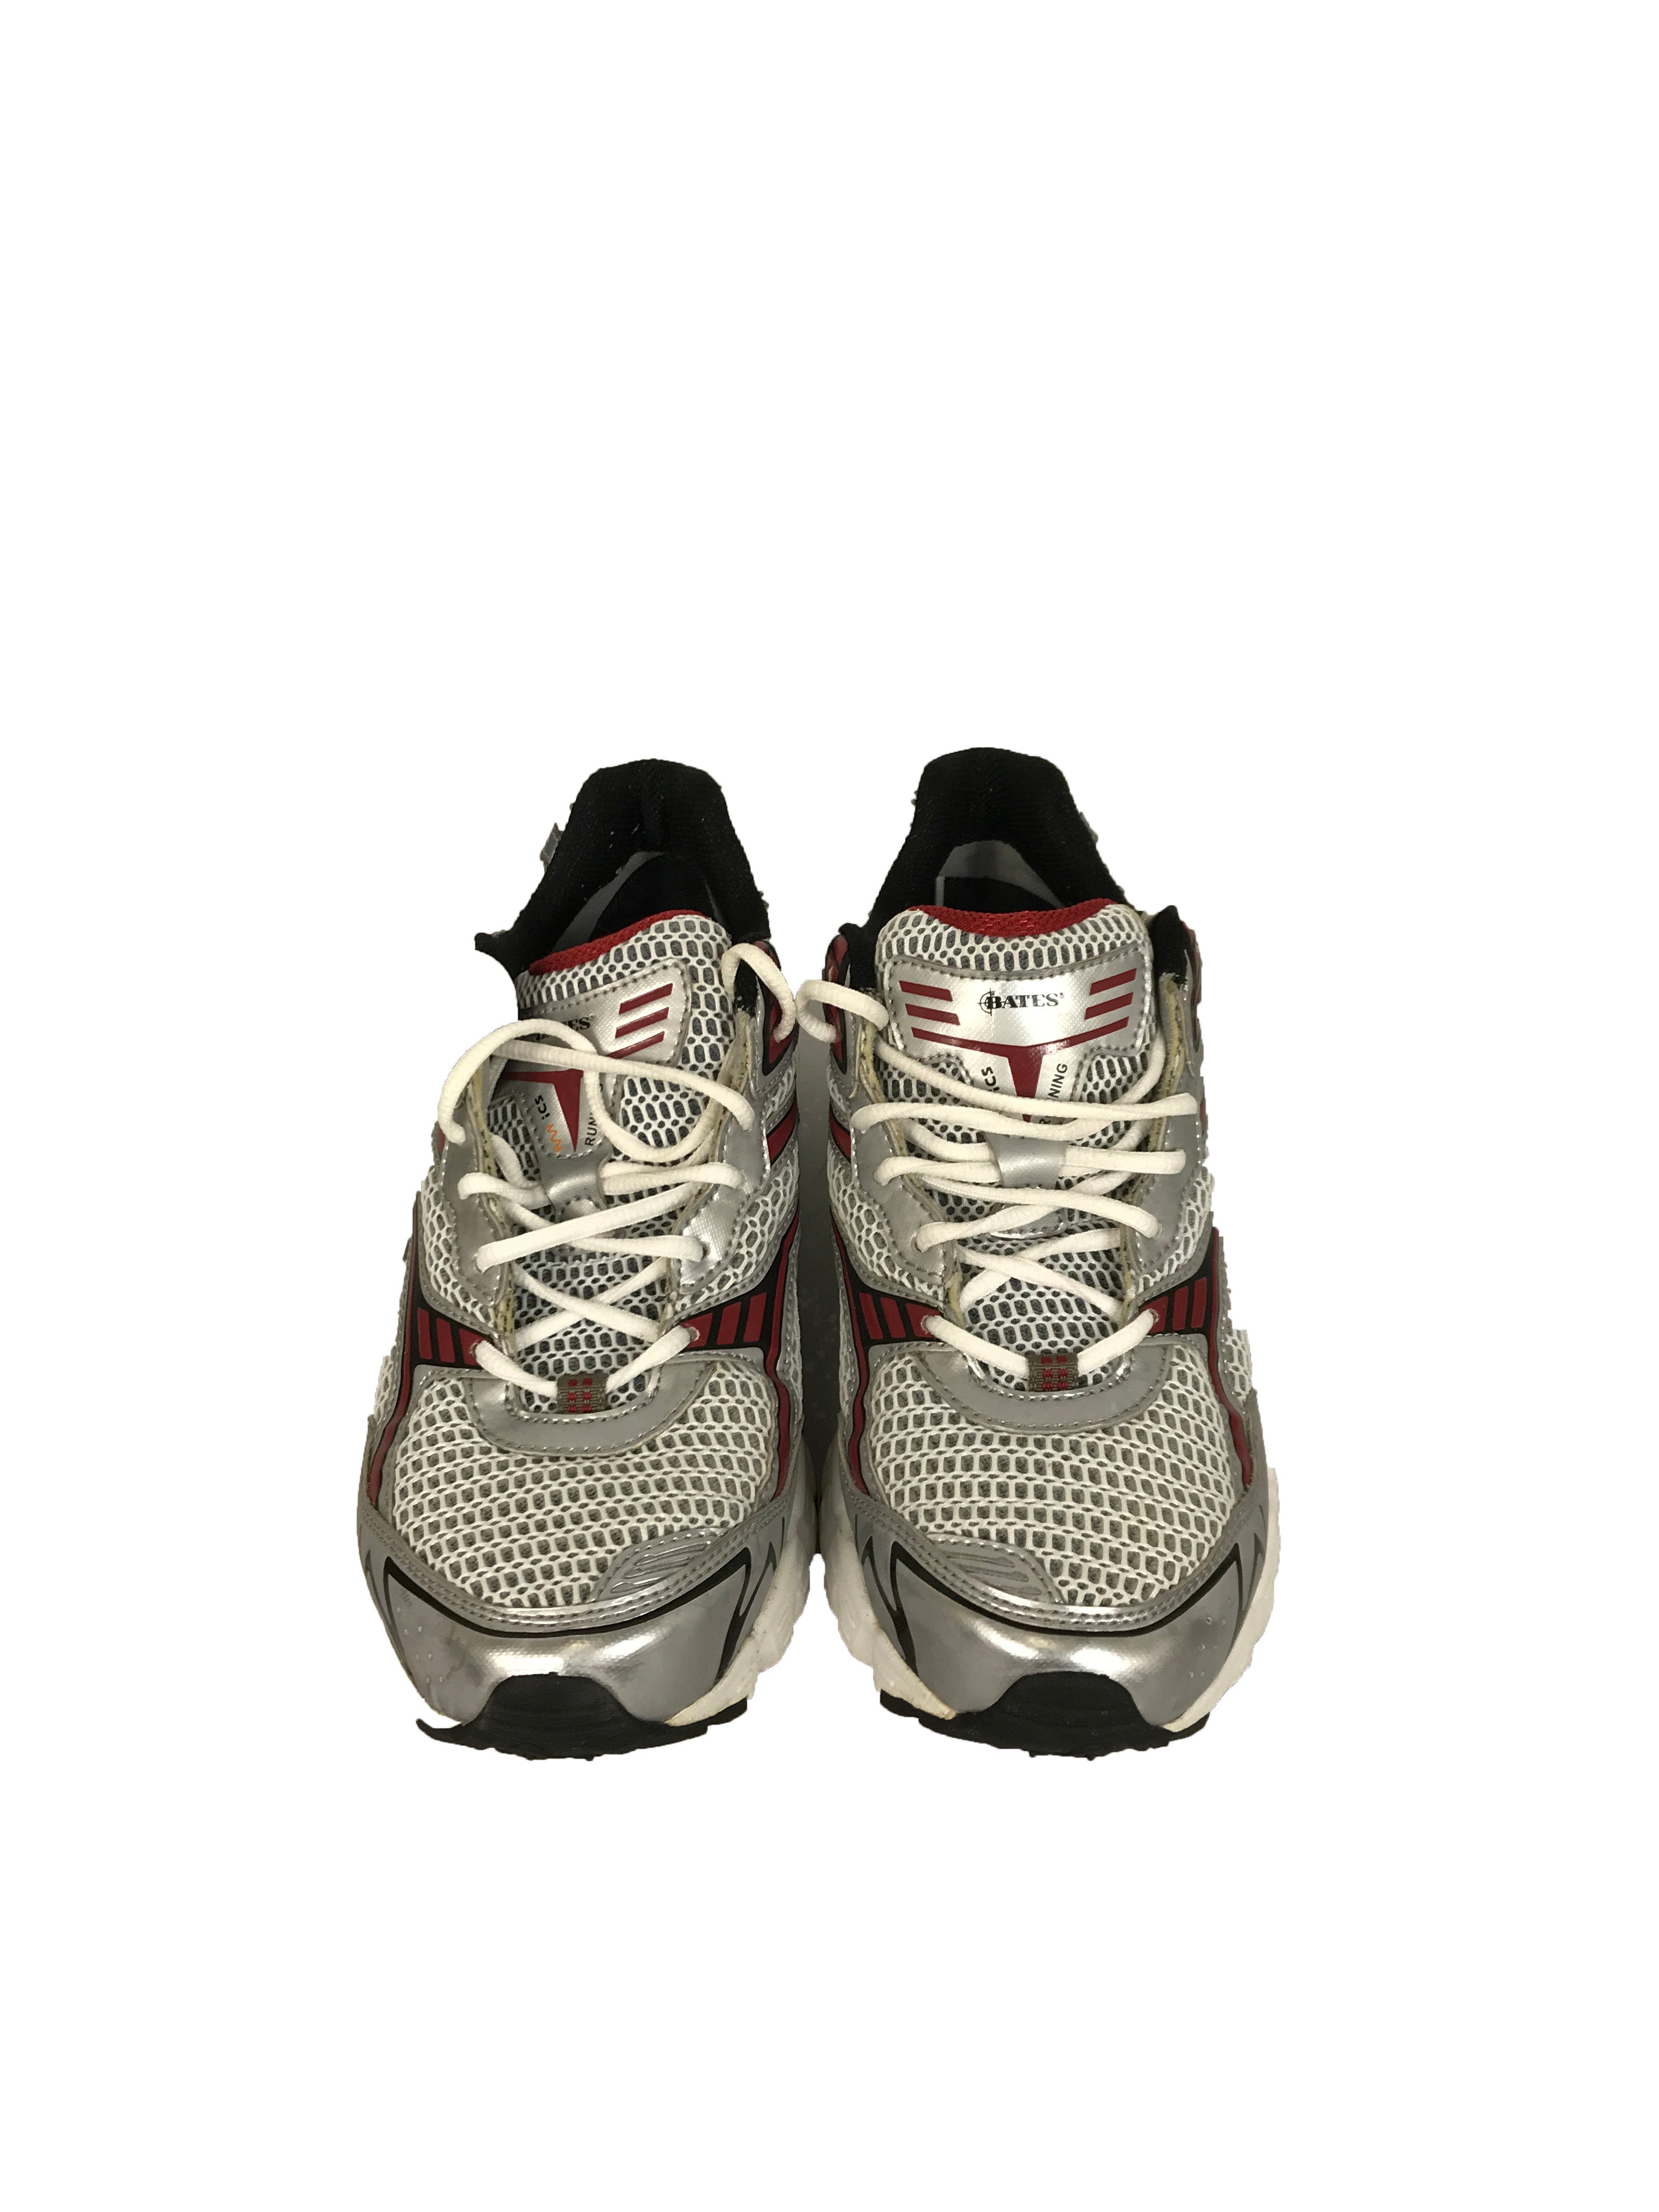 Bates iCS-Wavedisk Running Shoes Men's Size 12.5